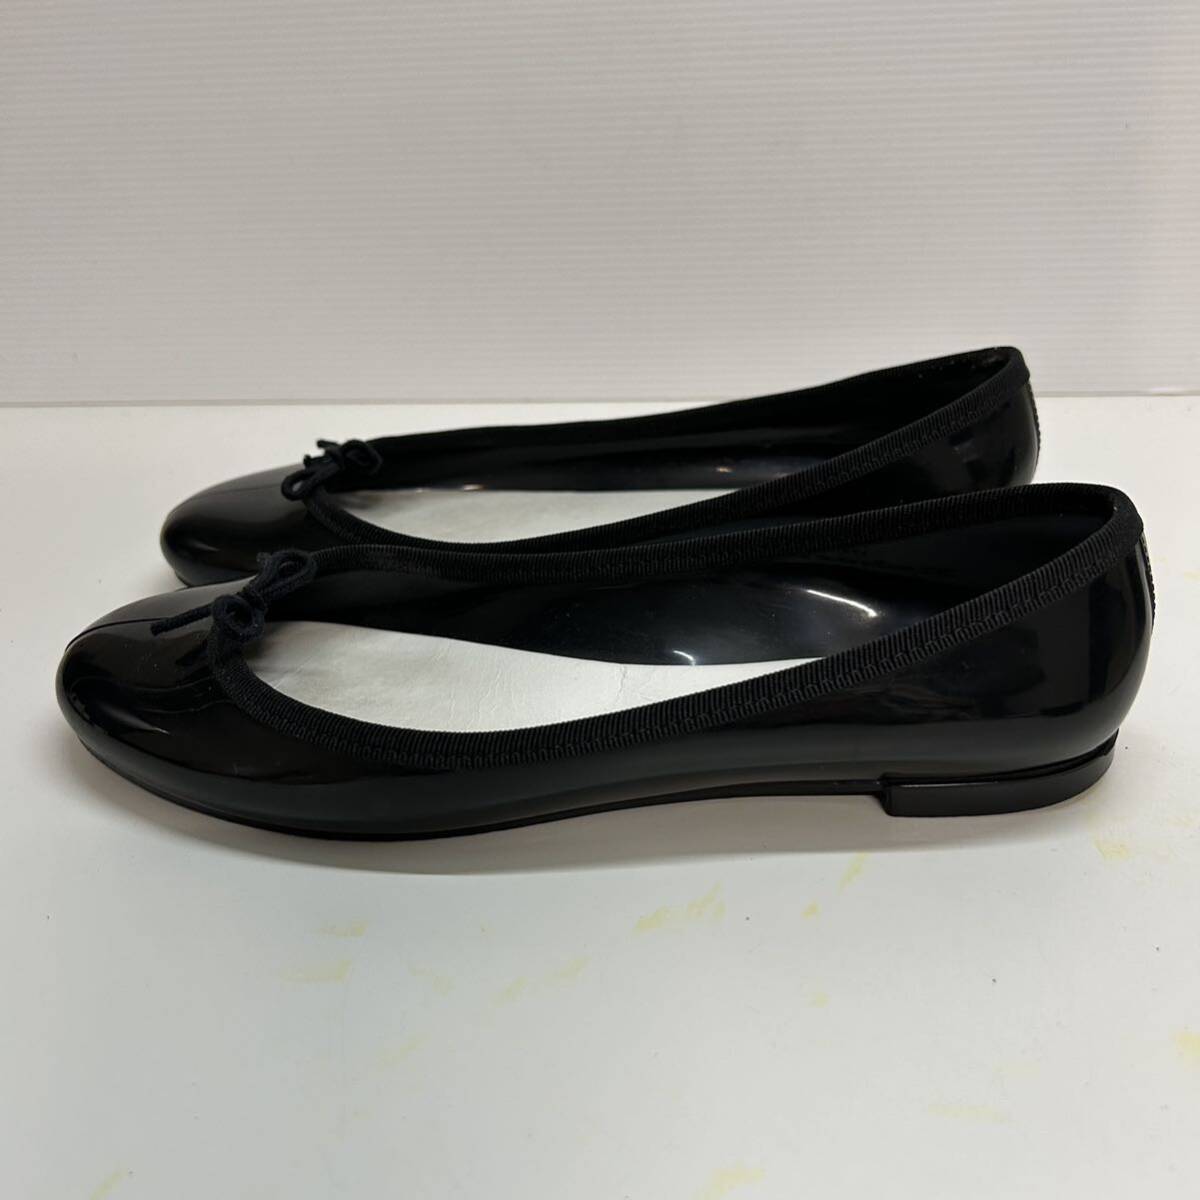 C630 repetto Repetto ballet shoes flat shoes 38 approximately 24cm Black Raver 